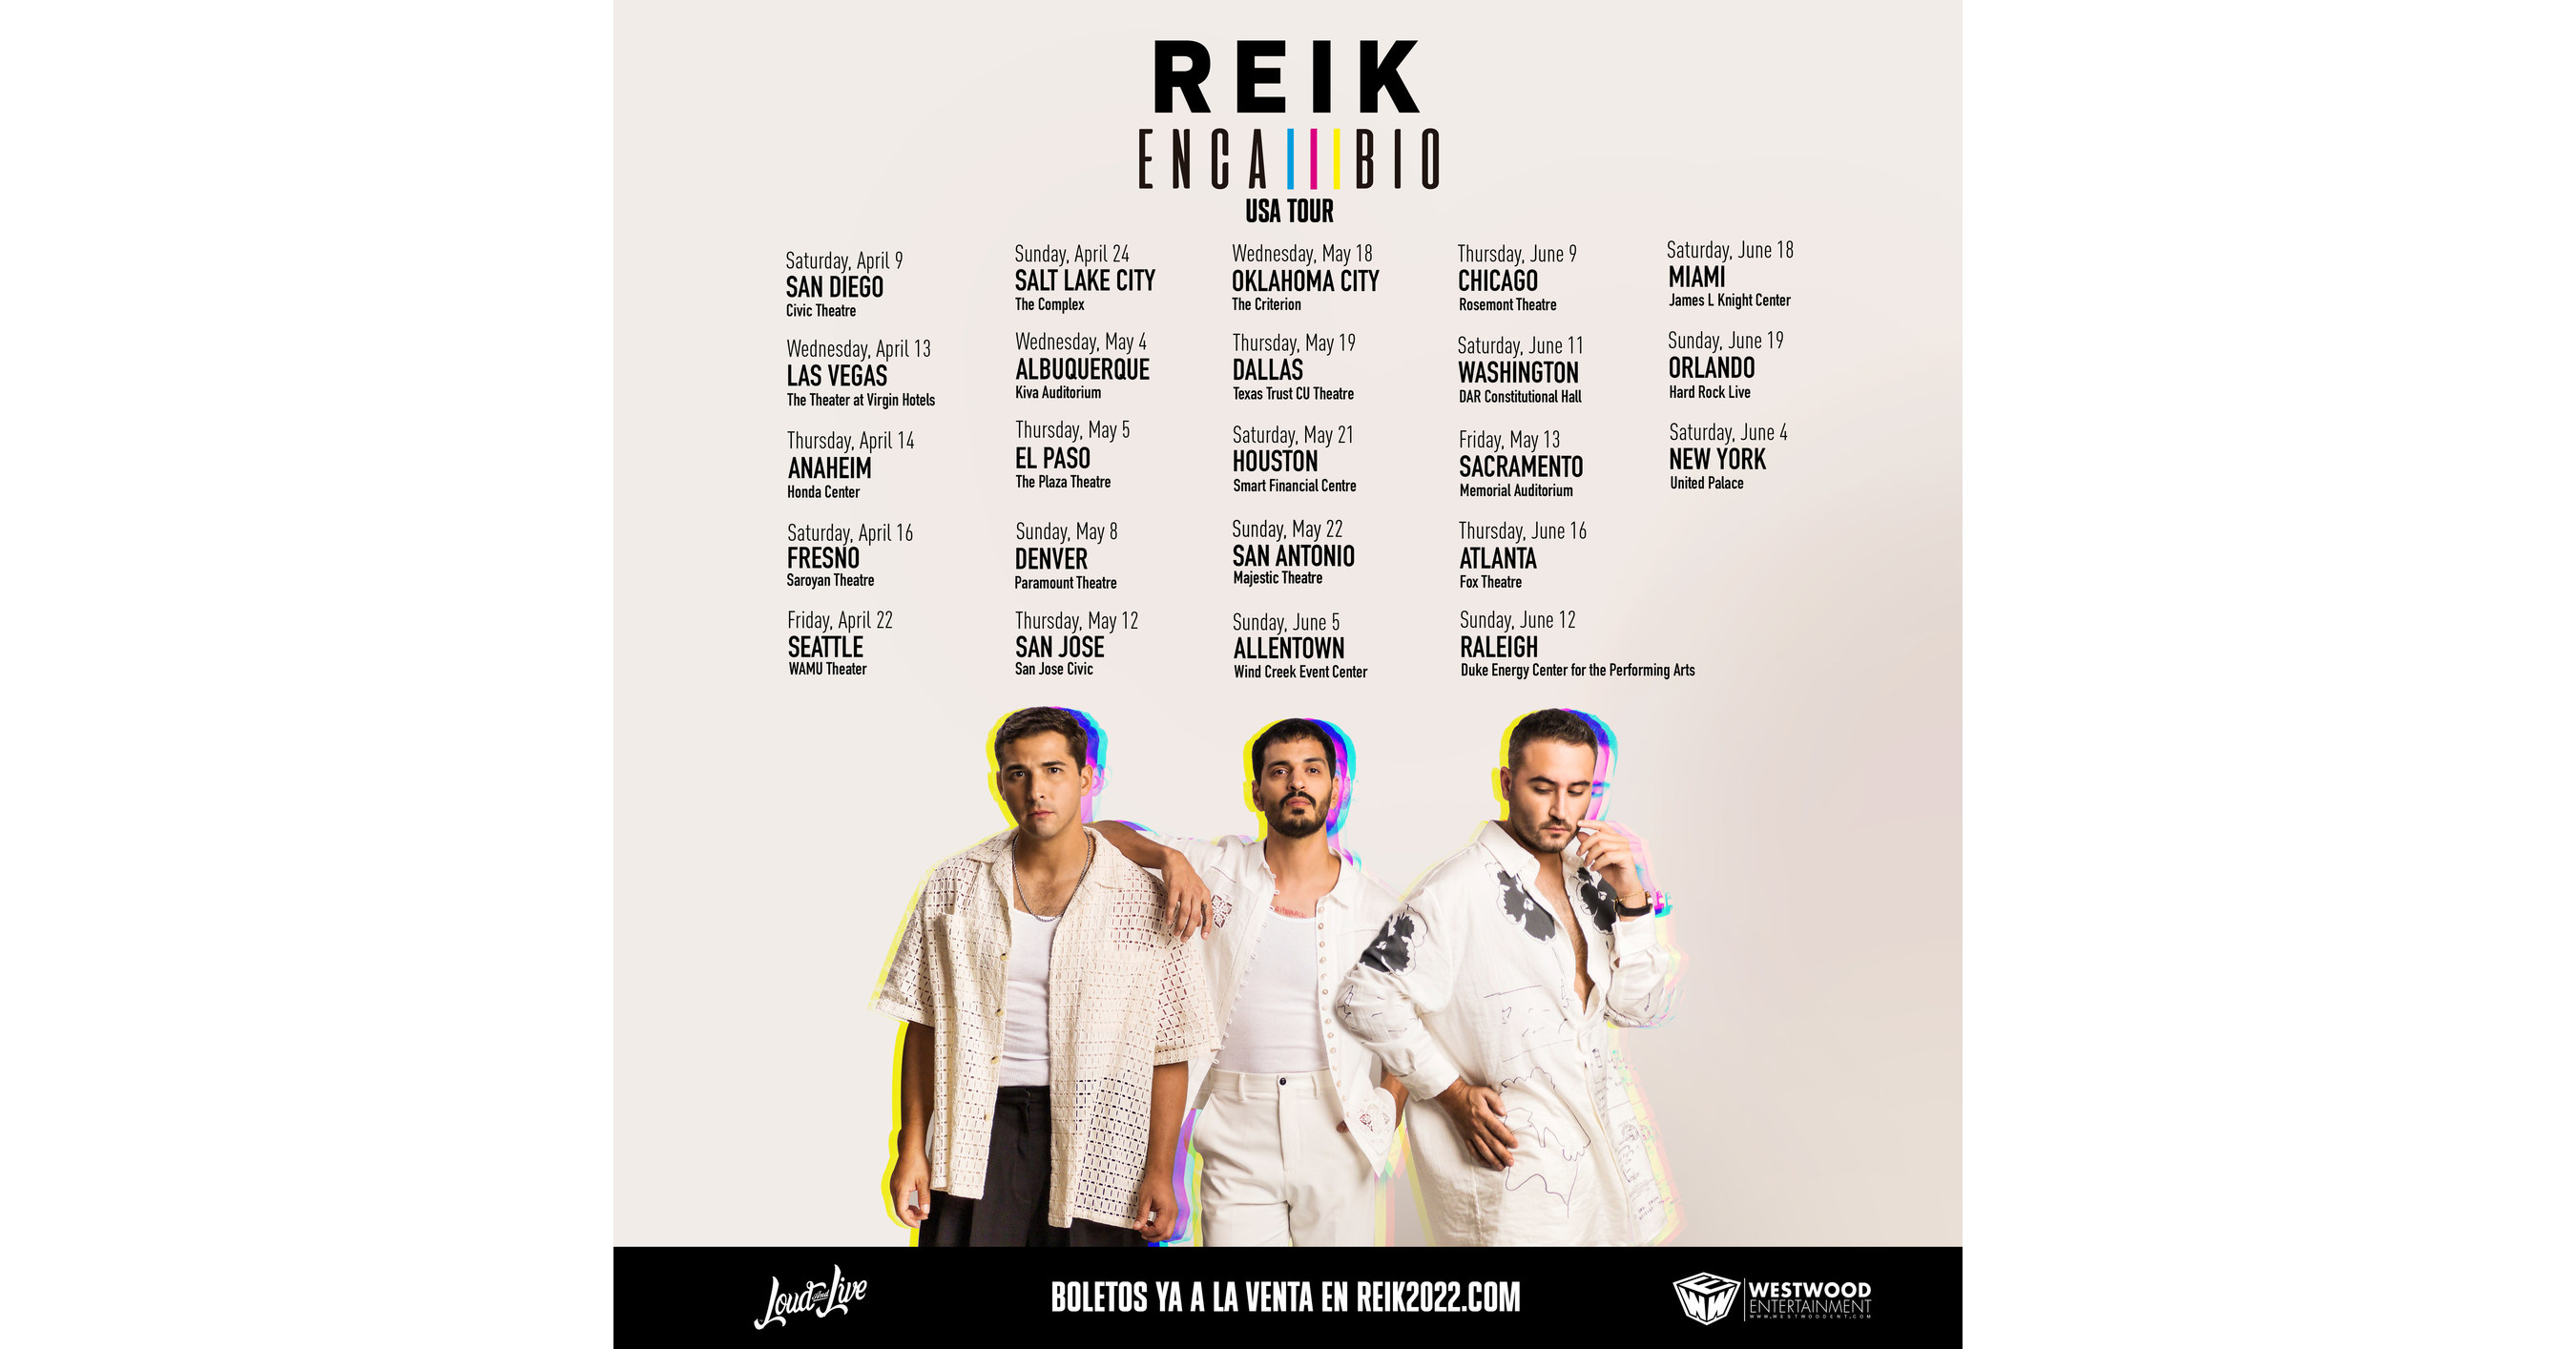 reik tour 2022 merchandise